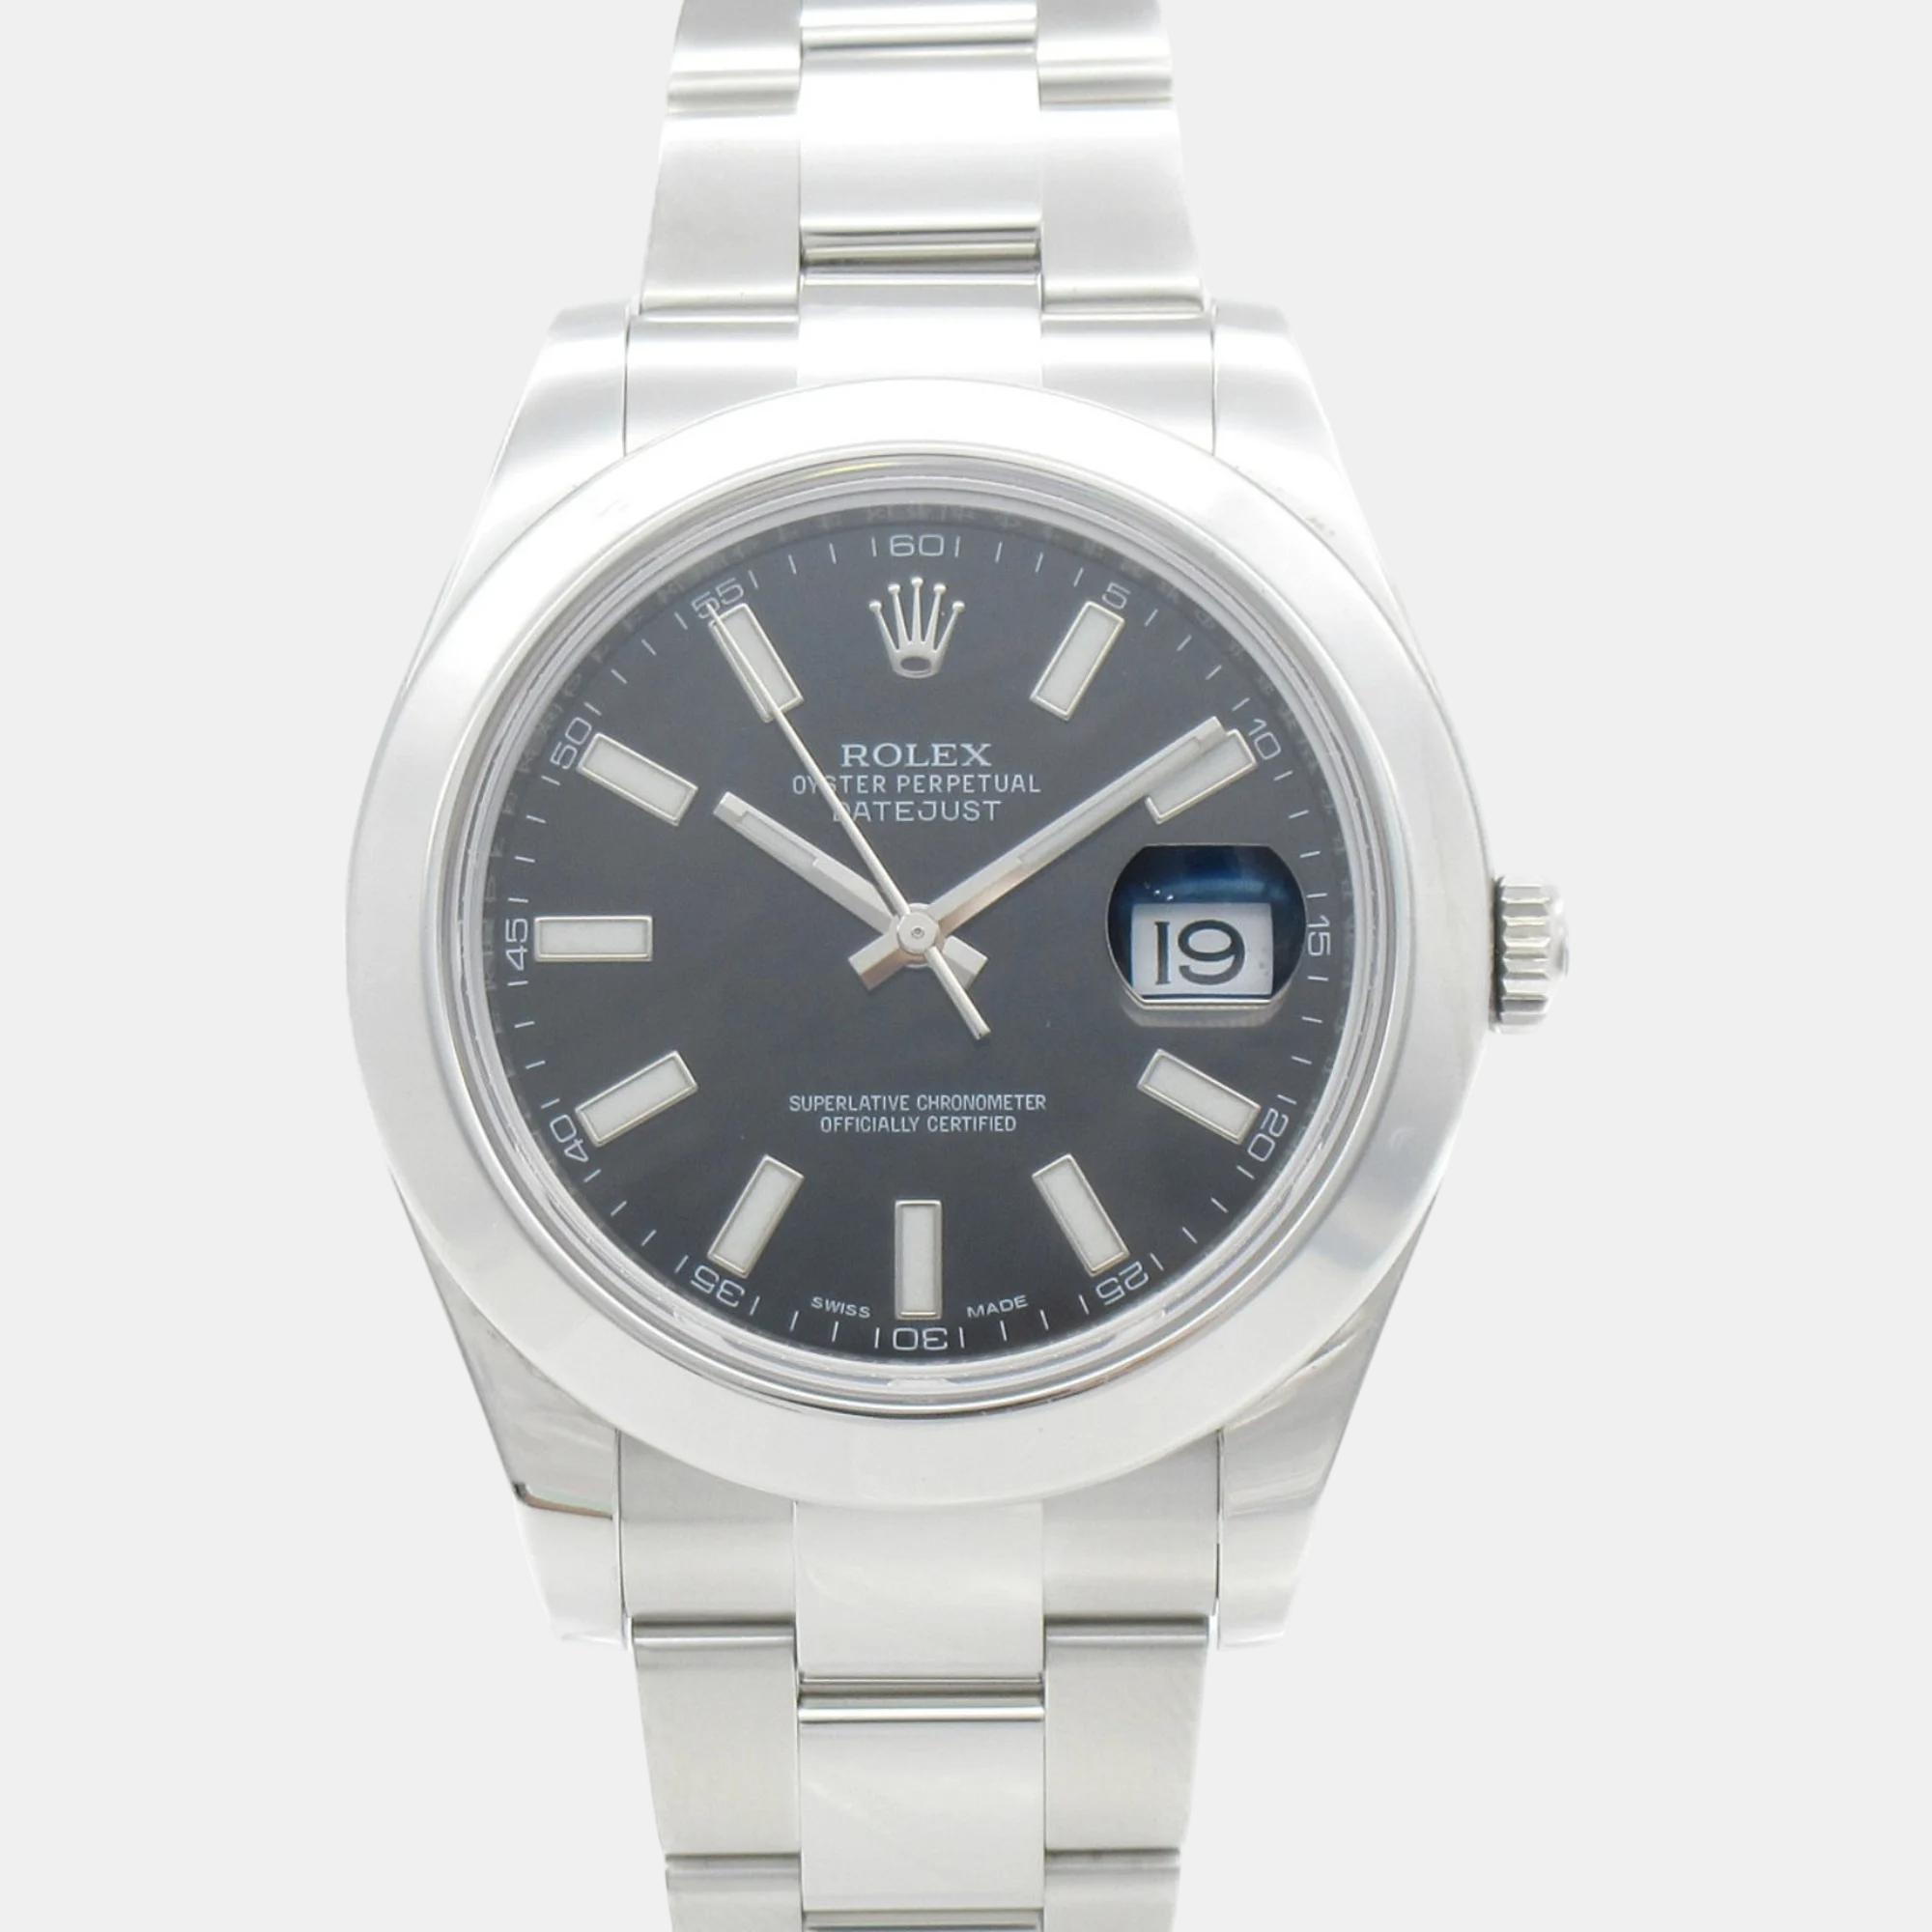 Rolex black stainless steel datejust ii 116300 automatic men's wristwatch 41 mm